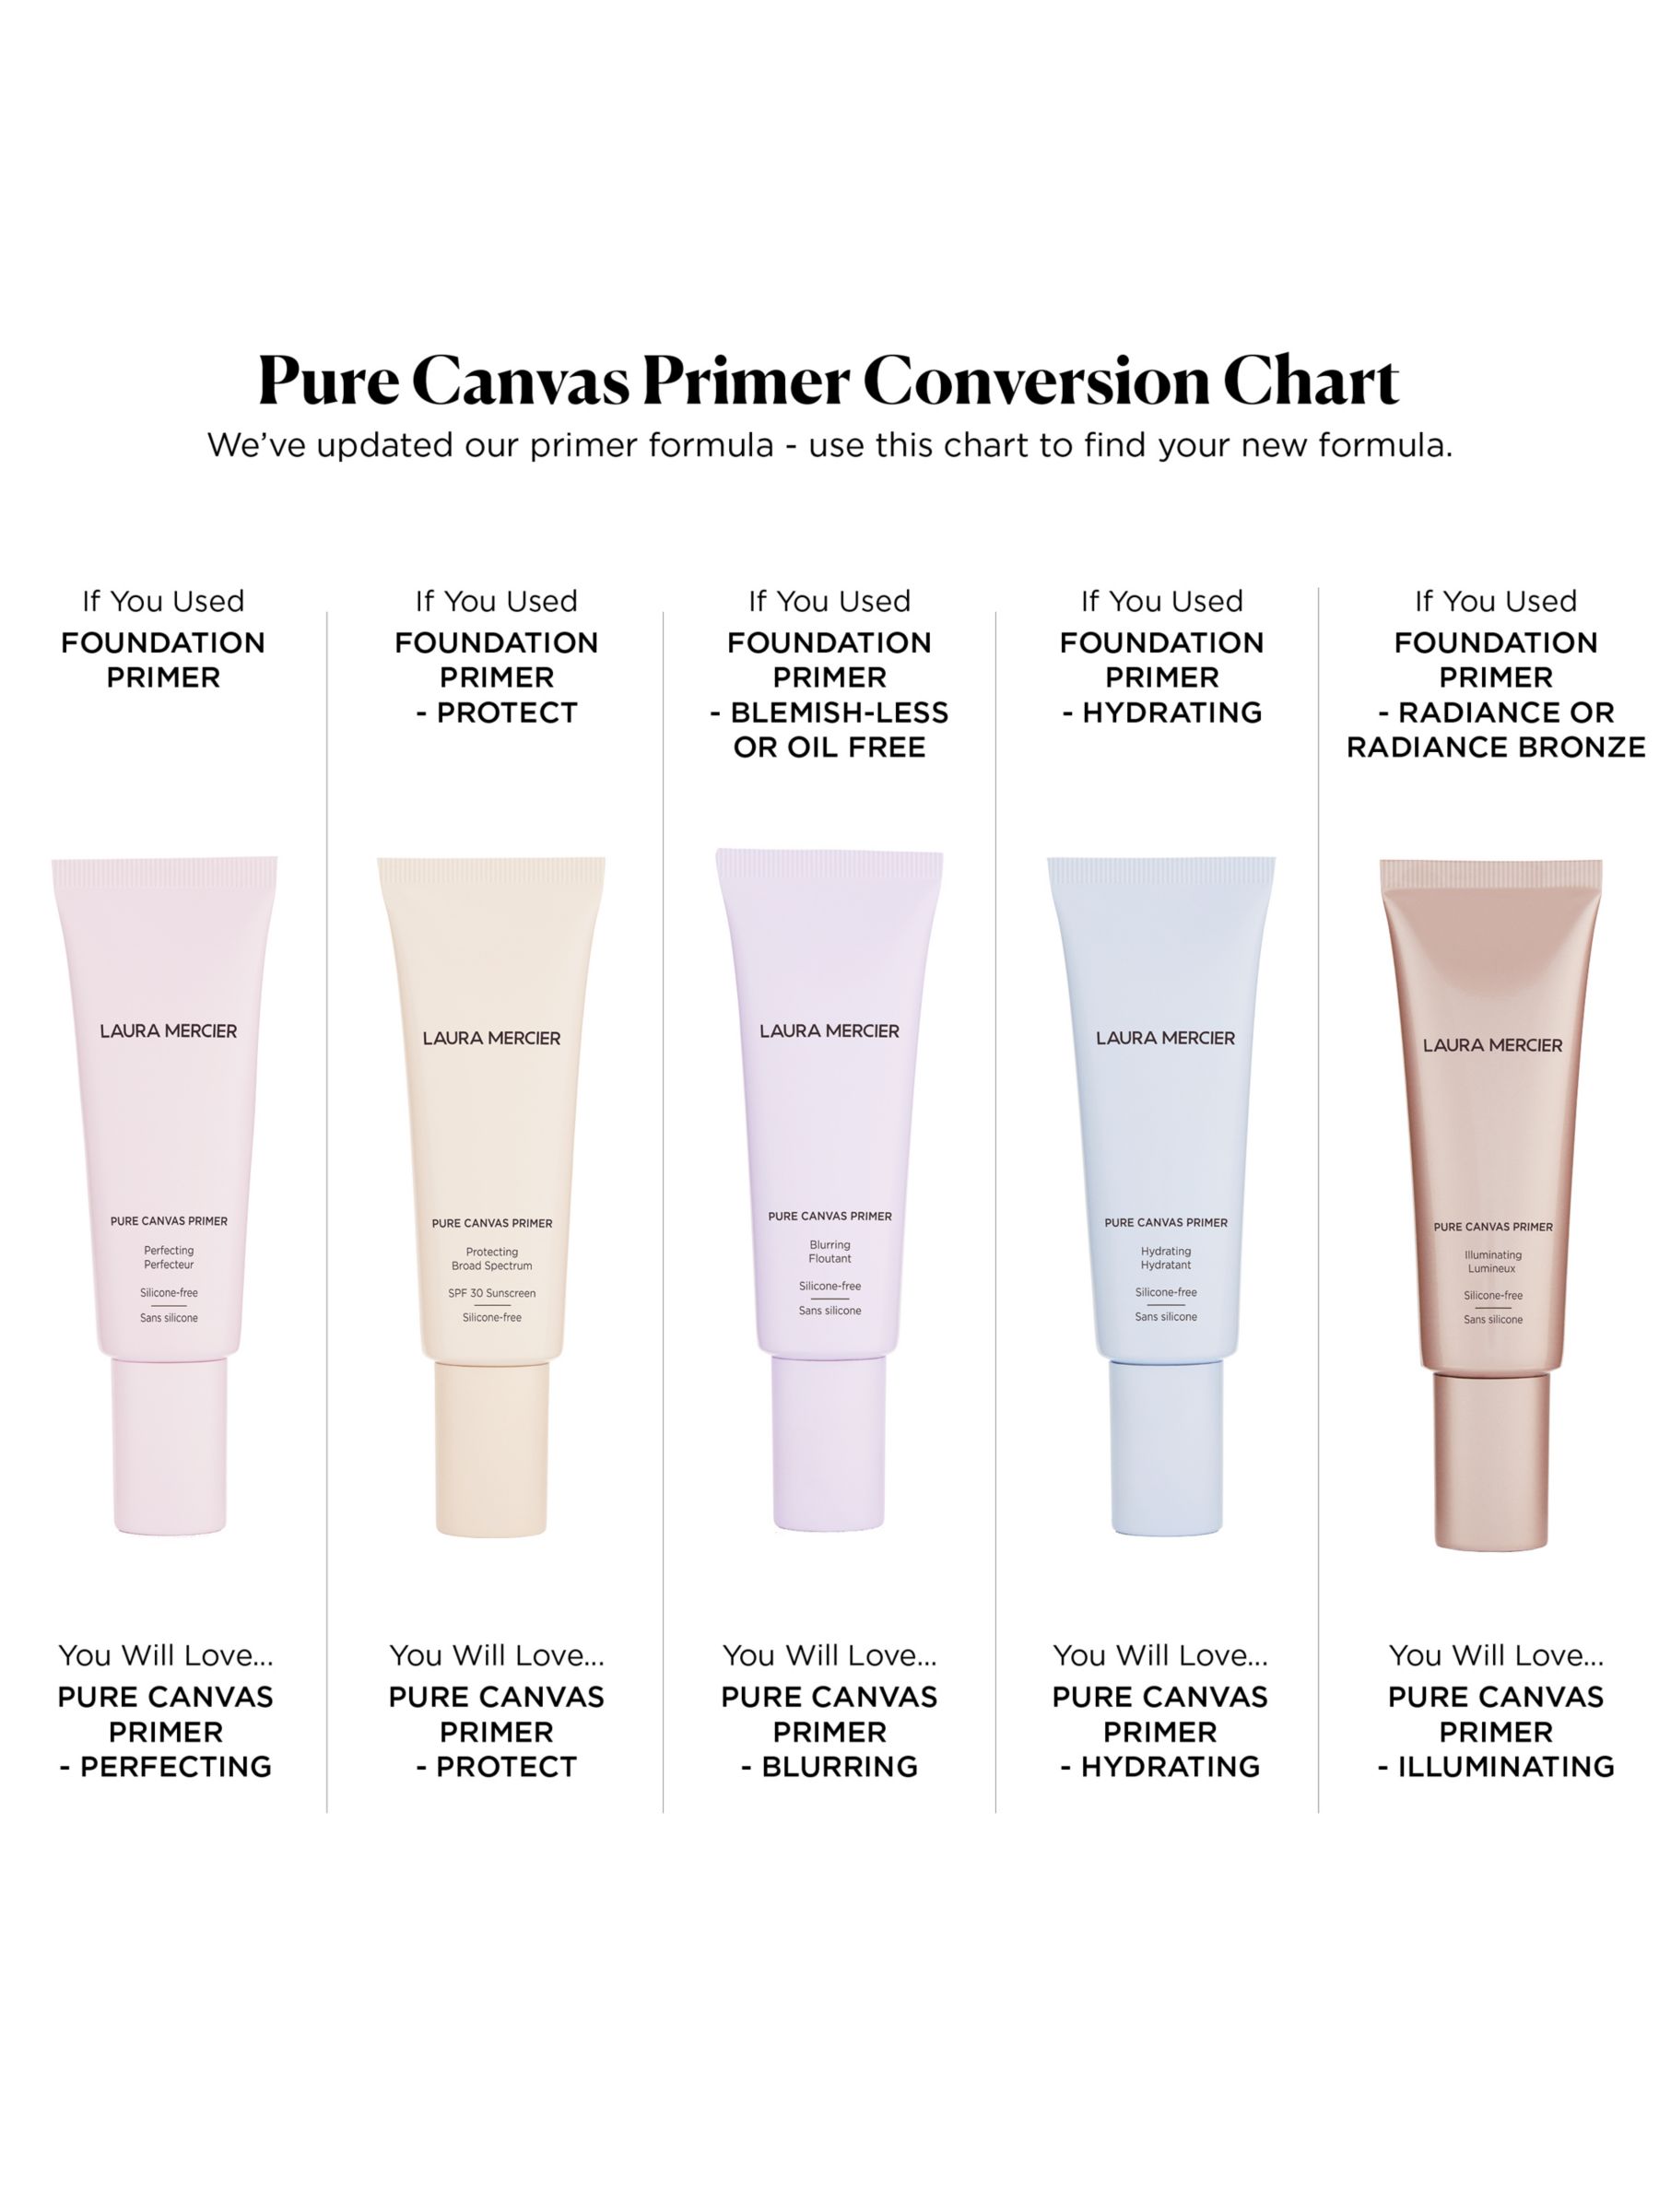 Laura Mercier Pure Canvas Primer Perfecting, 50ml 5